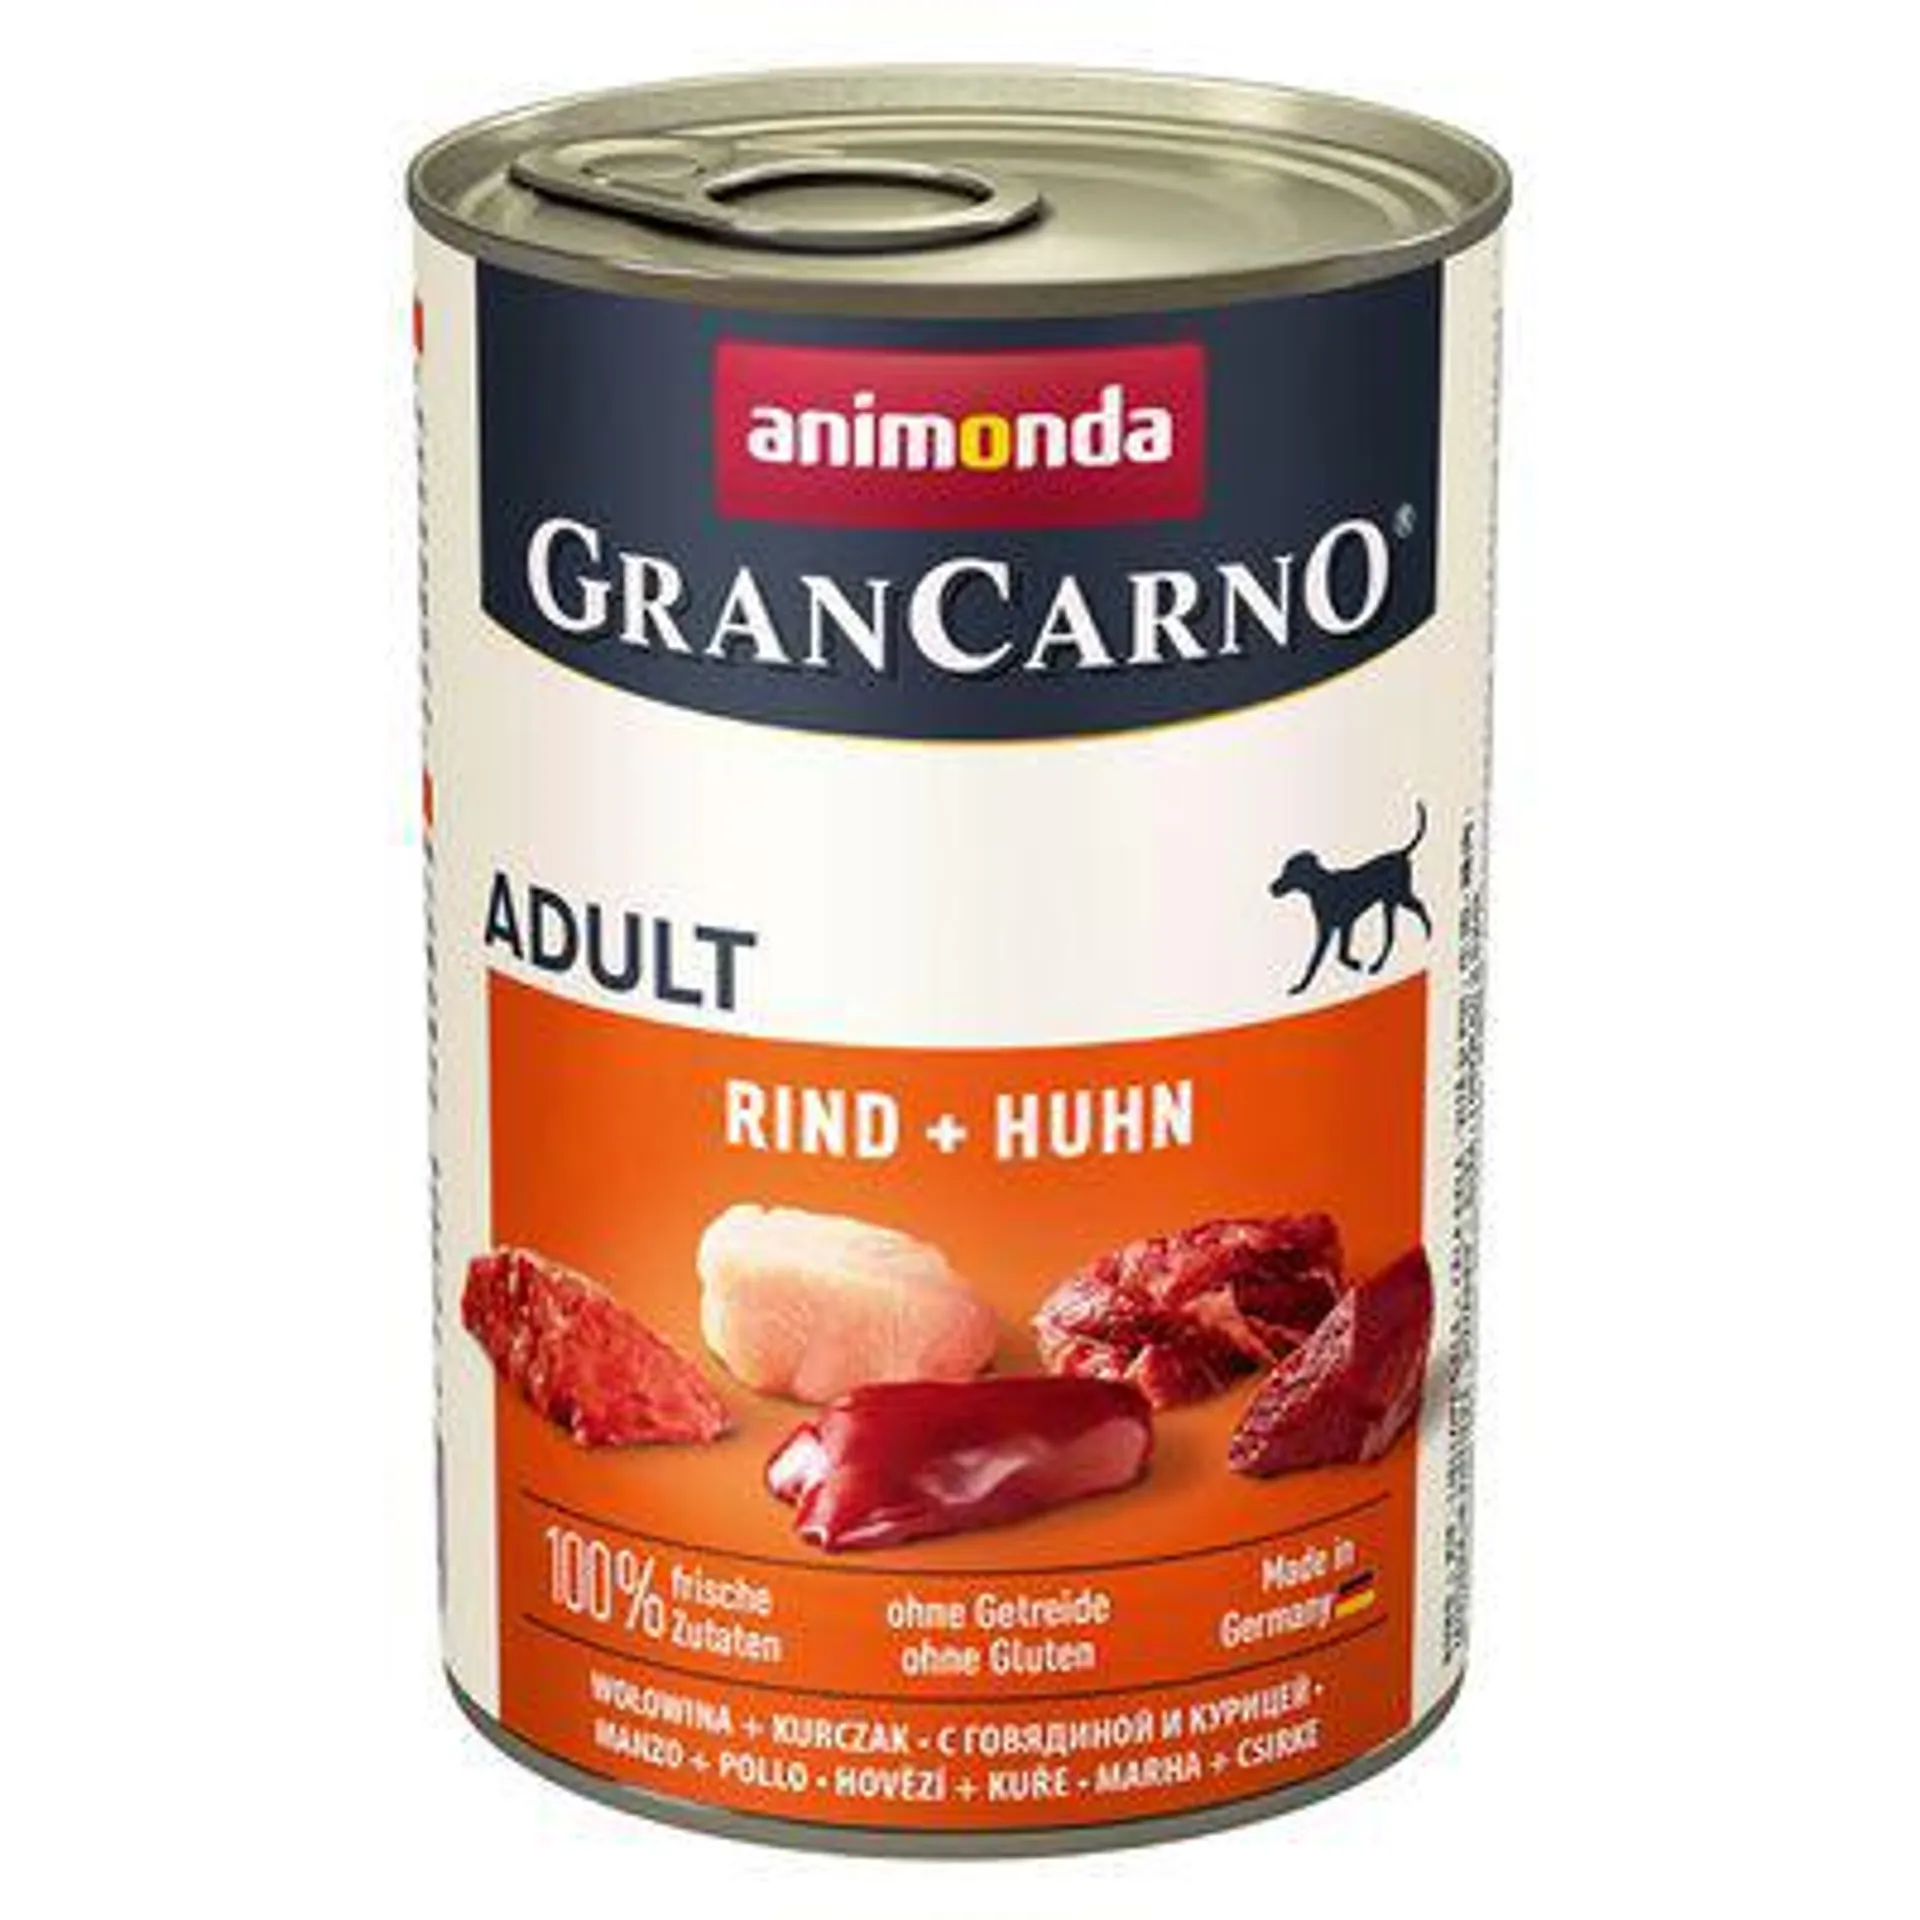 Animonda GranCarno Original Adult 6 x 400 g